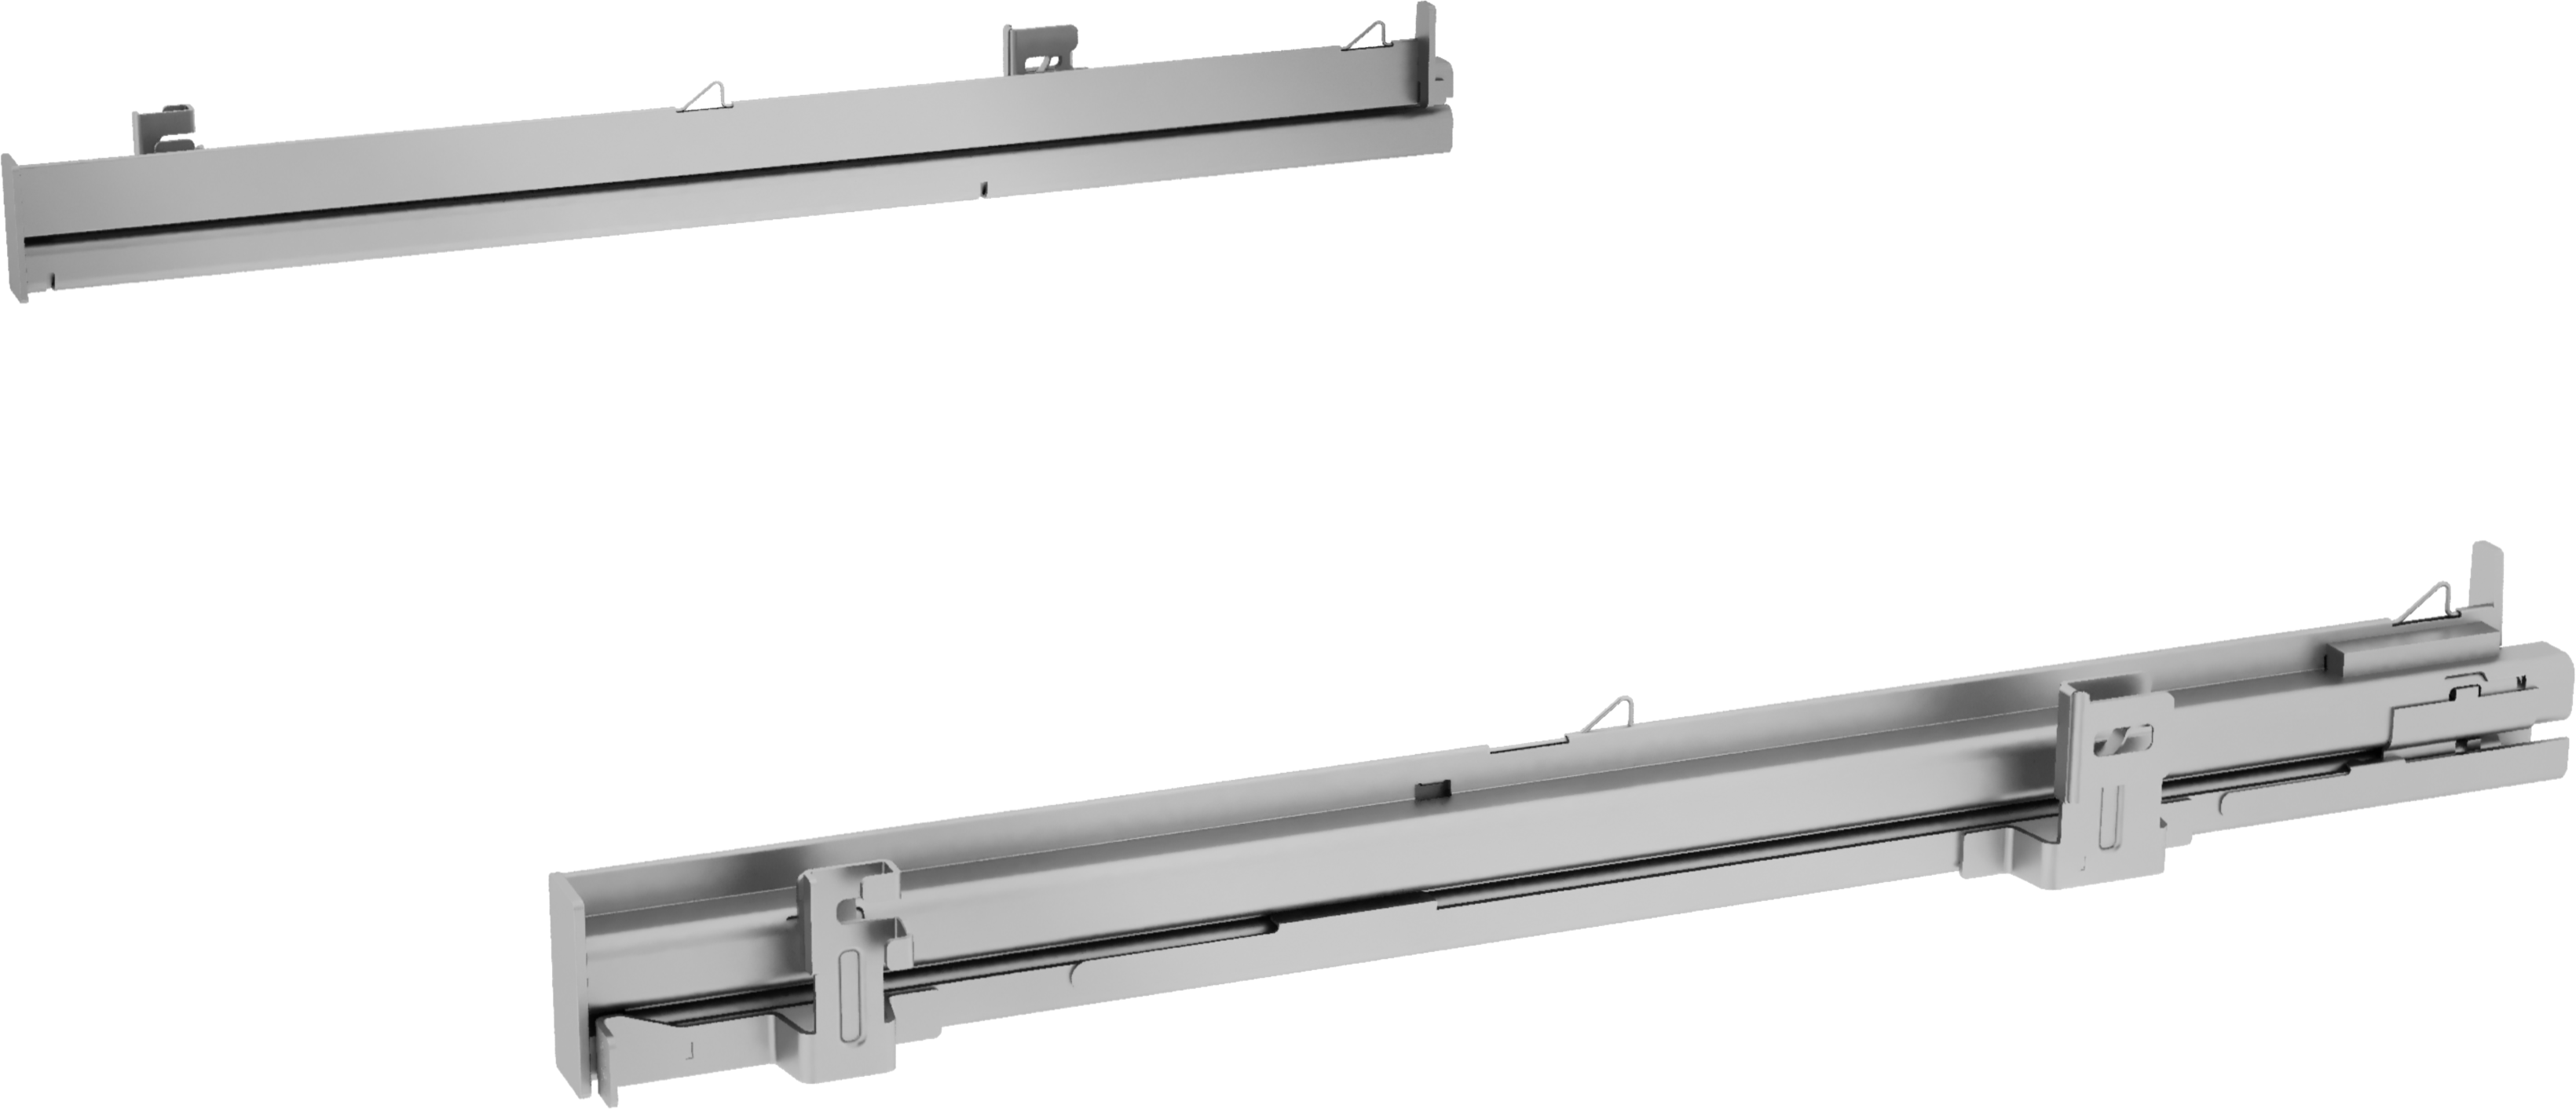 Clip rail full extension, Stainless steel, HEZ638000